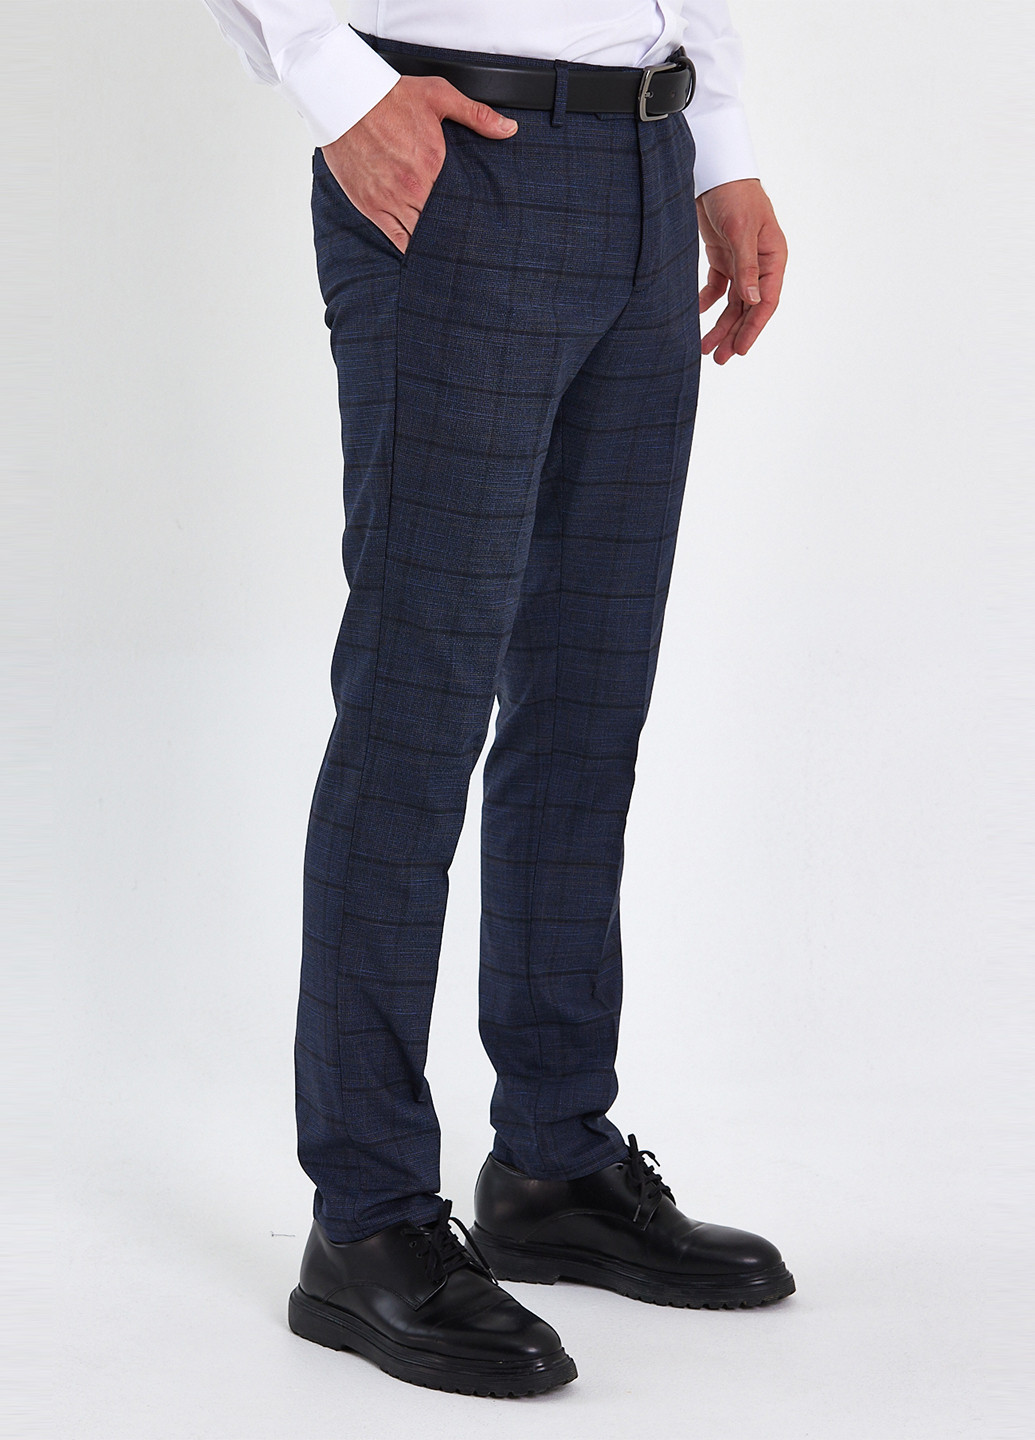 Темно-синие классические демисезонные классические брюки Trend Collection